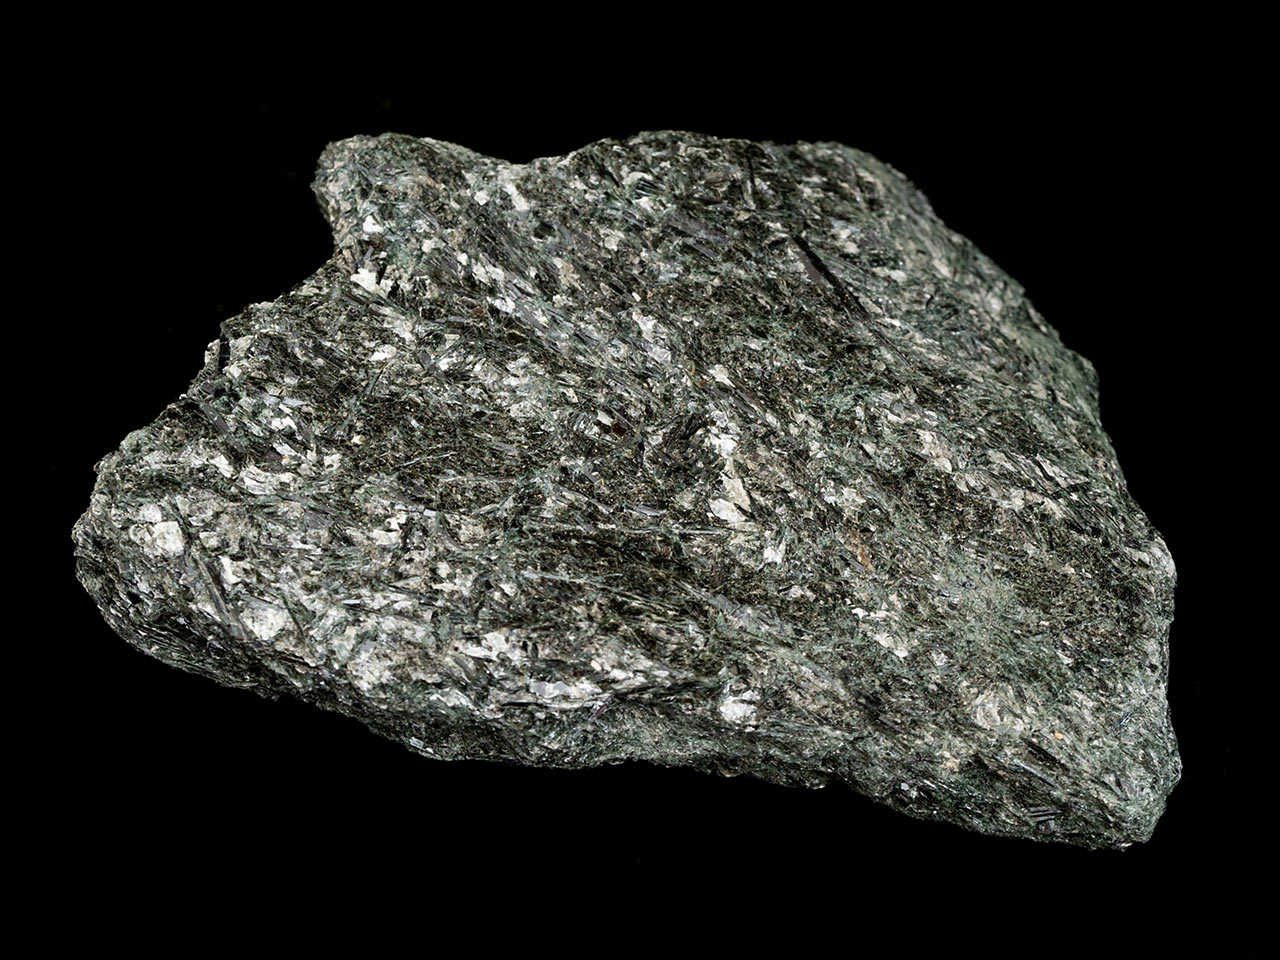 Alpine actinolite schist with dark green needle shaped crystals of actinolite from Habachtal, Austria